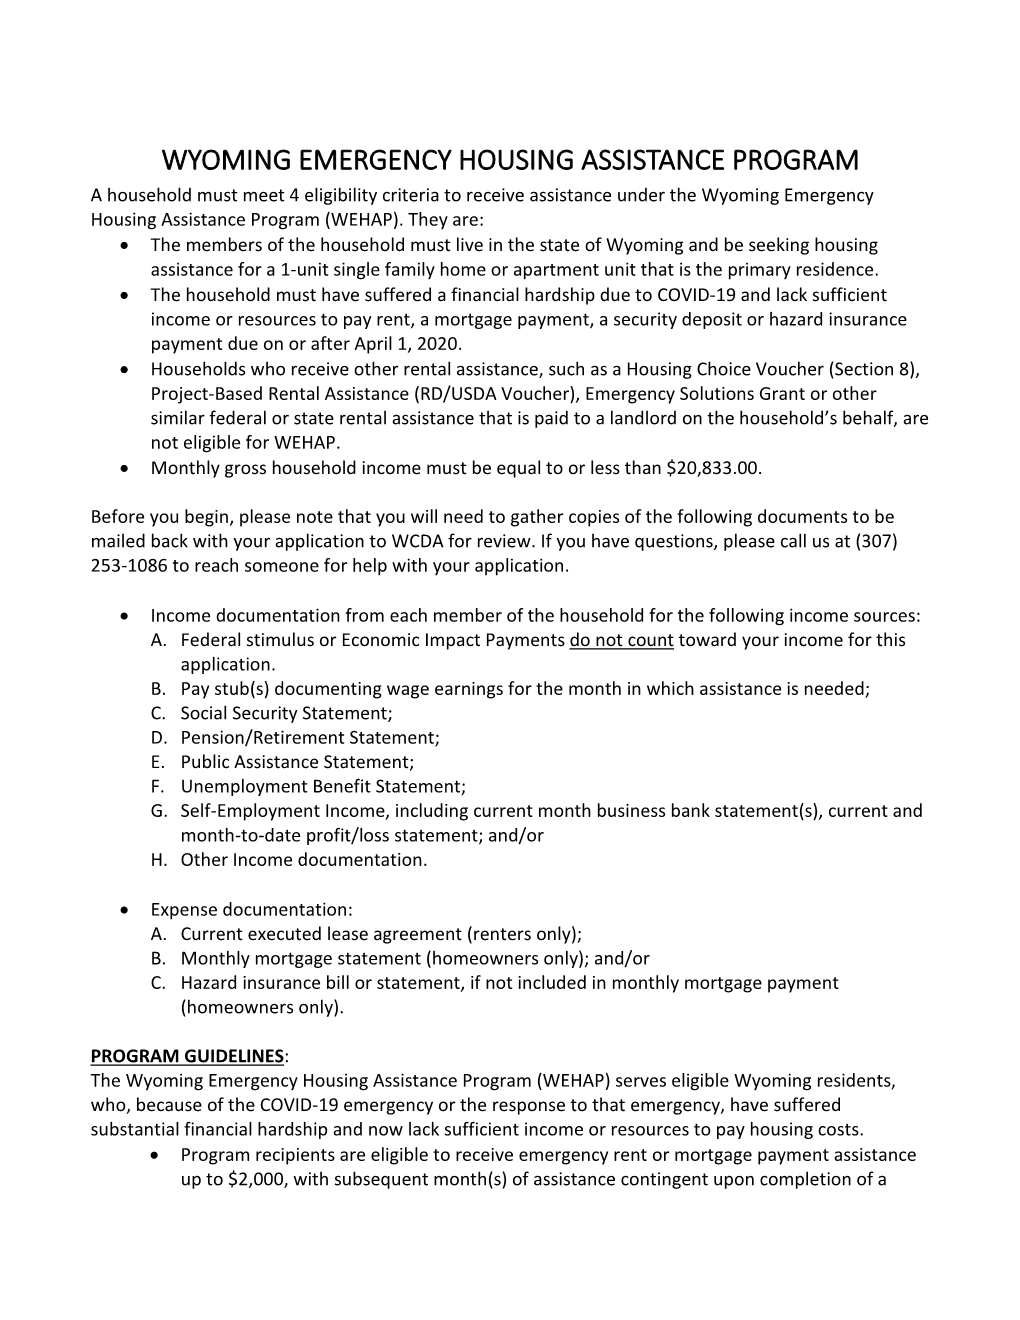 Wyoming Emergency Housing Assistance Program